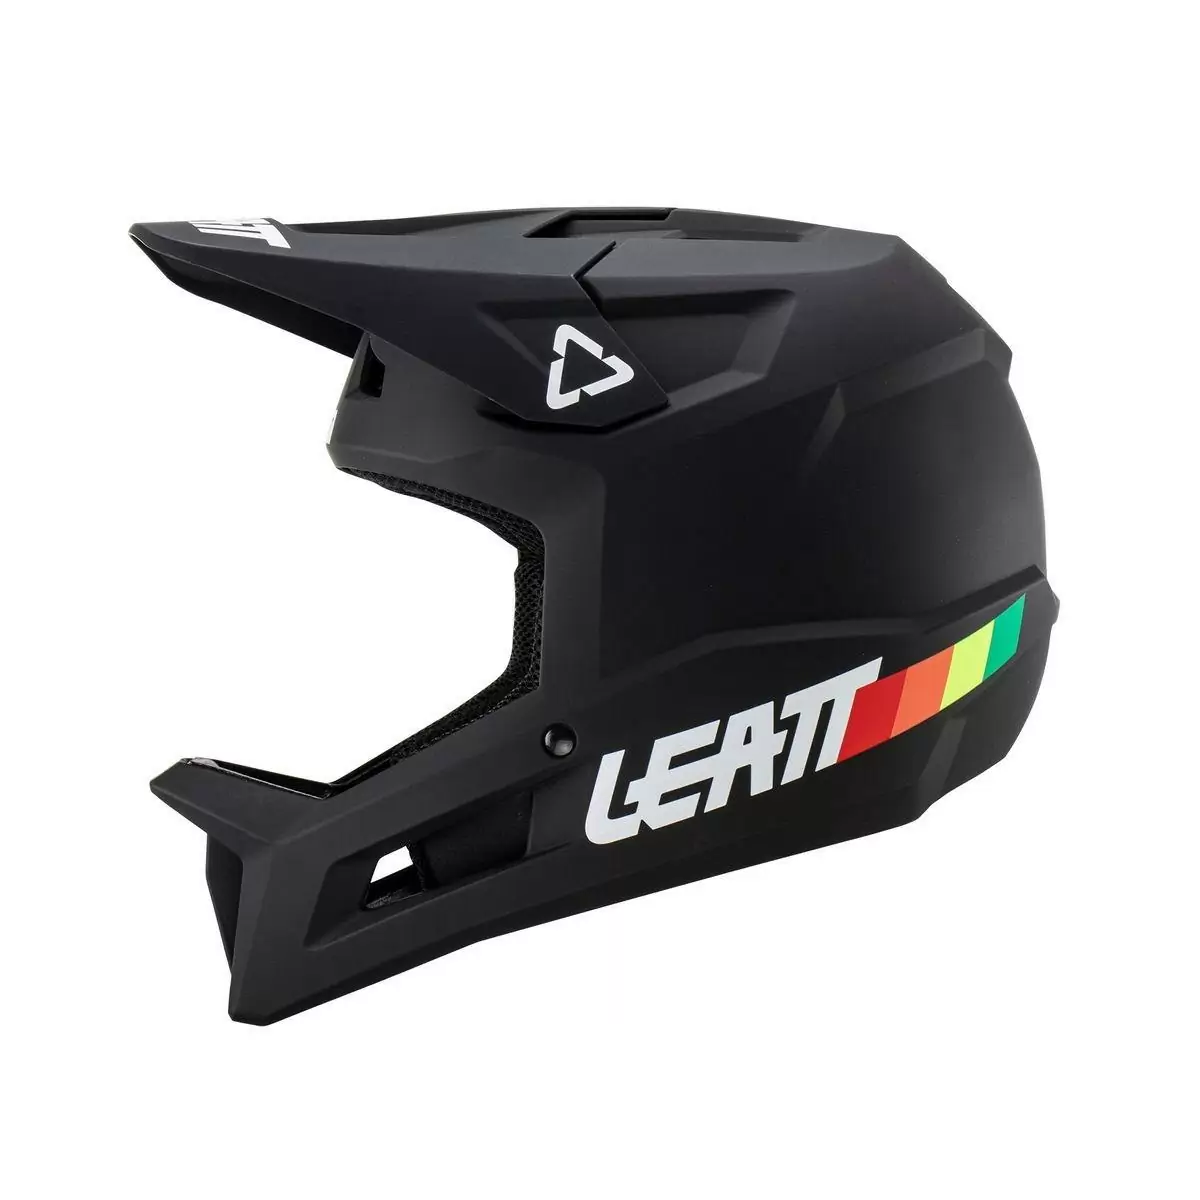 Gravity 1.0 MTB Fullface Helmet Stealth Black Size XS (53-54cm) #1